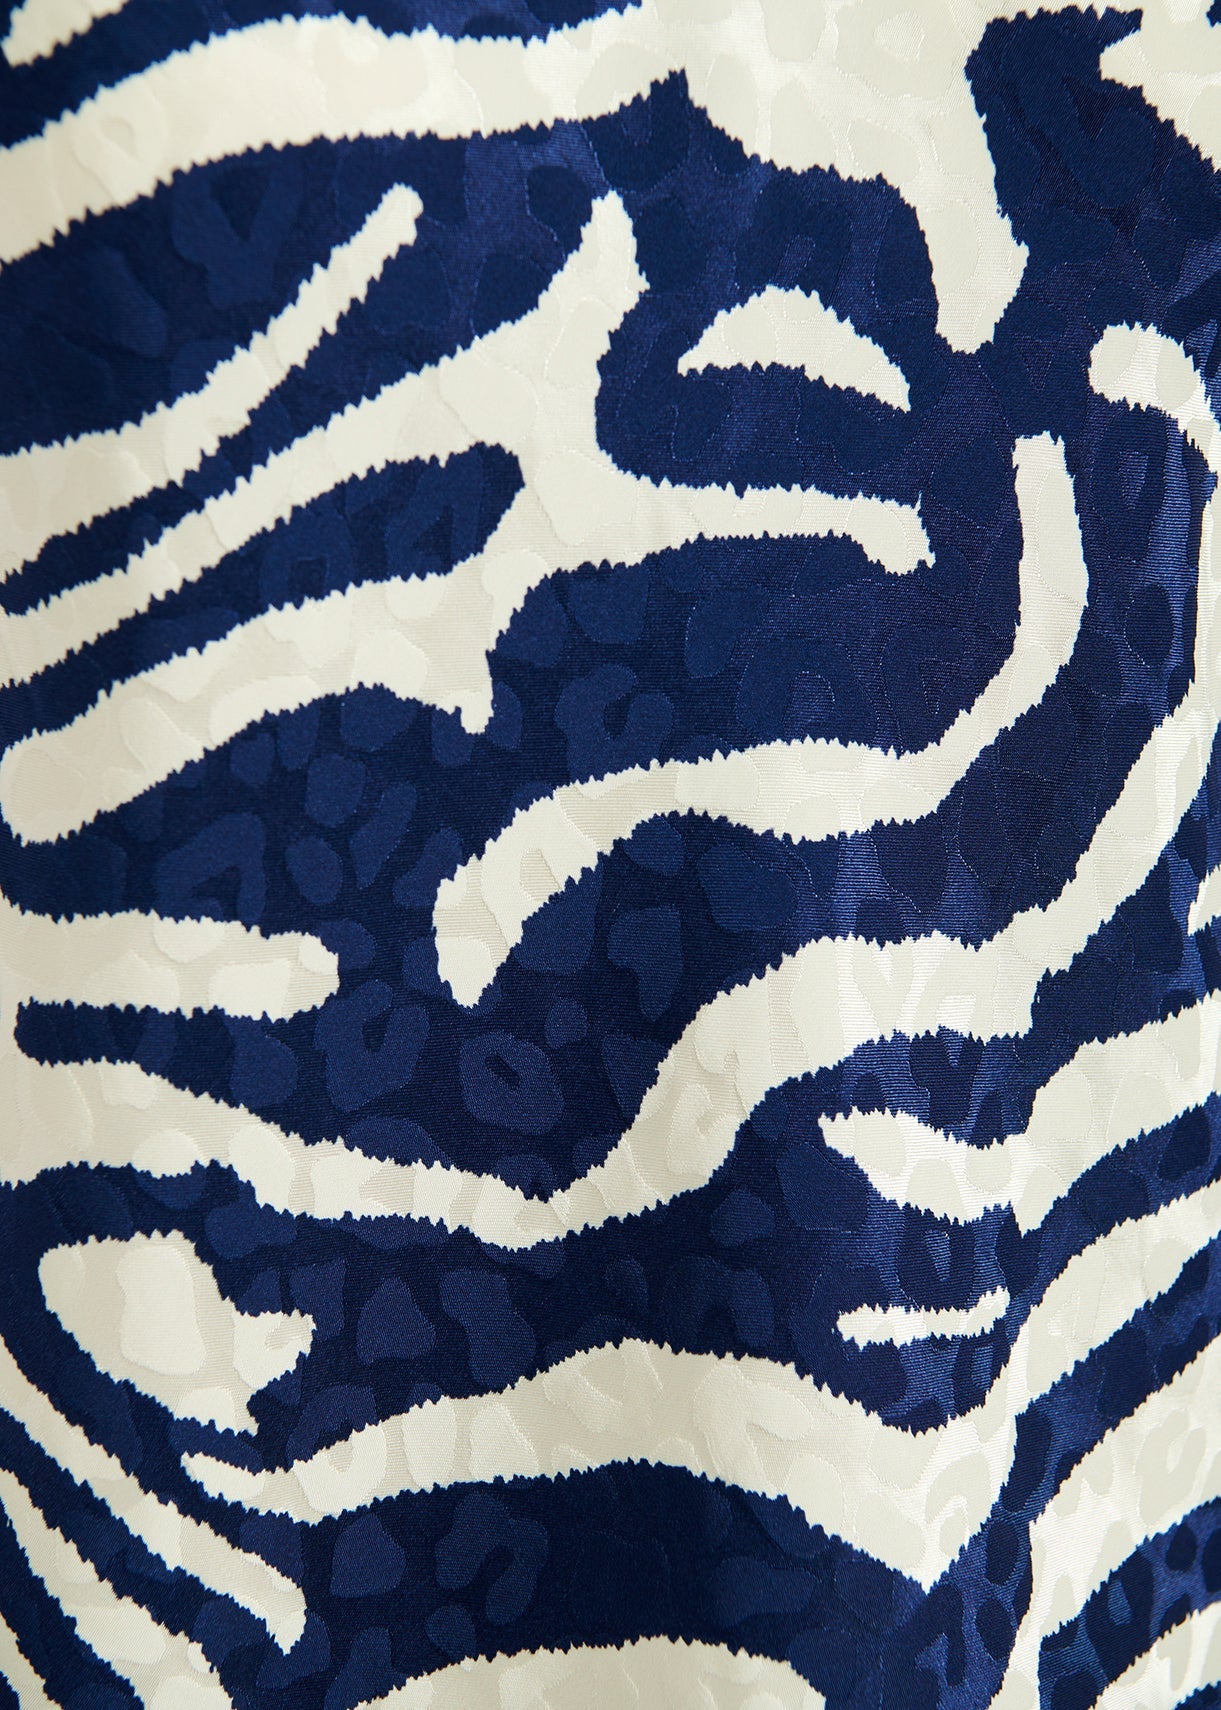 Factory zebra print vest top - navy blue / off - white Tops